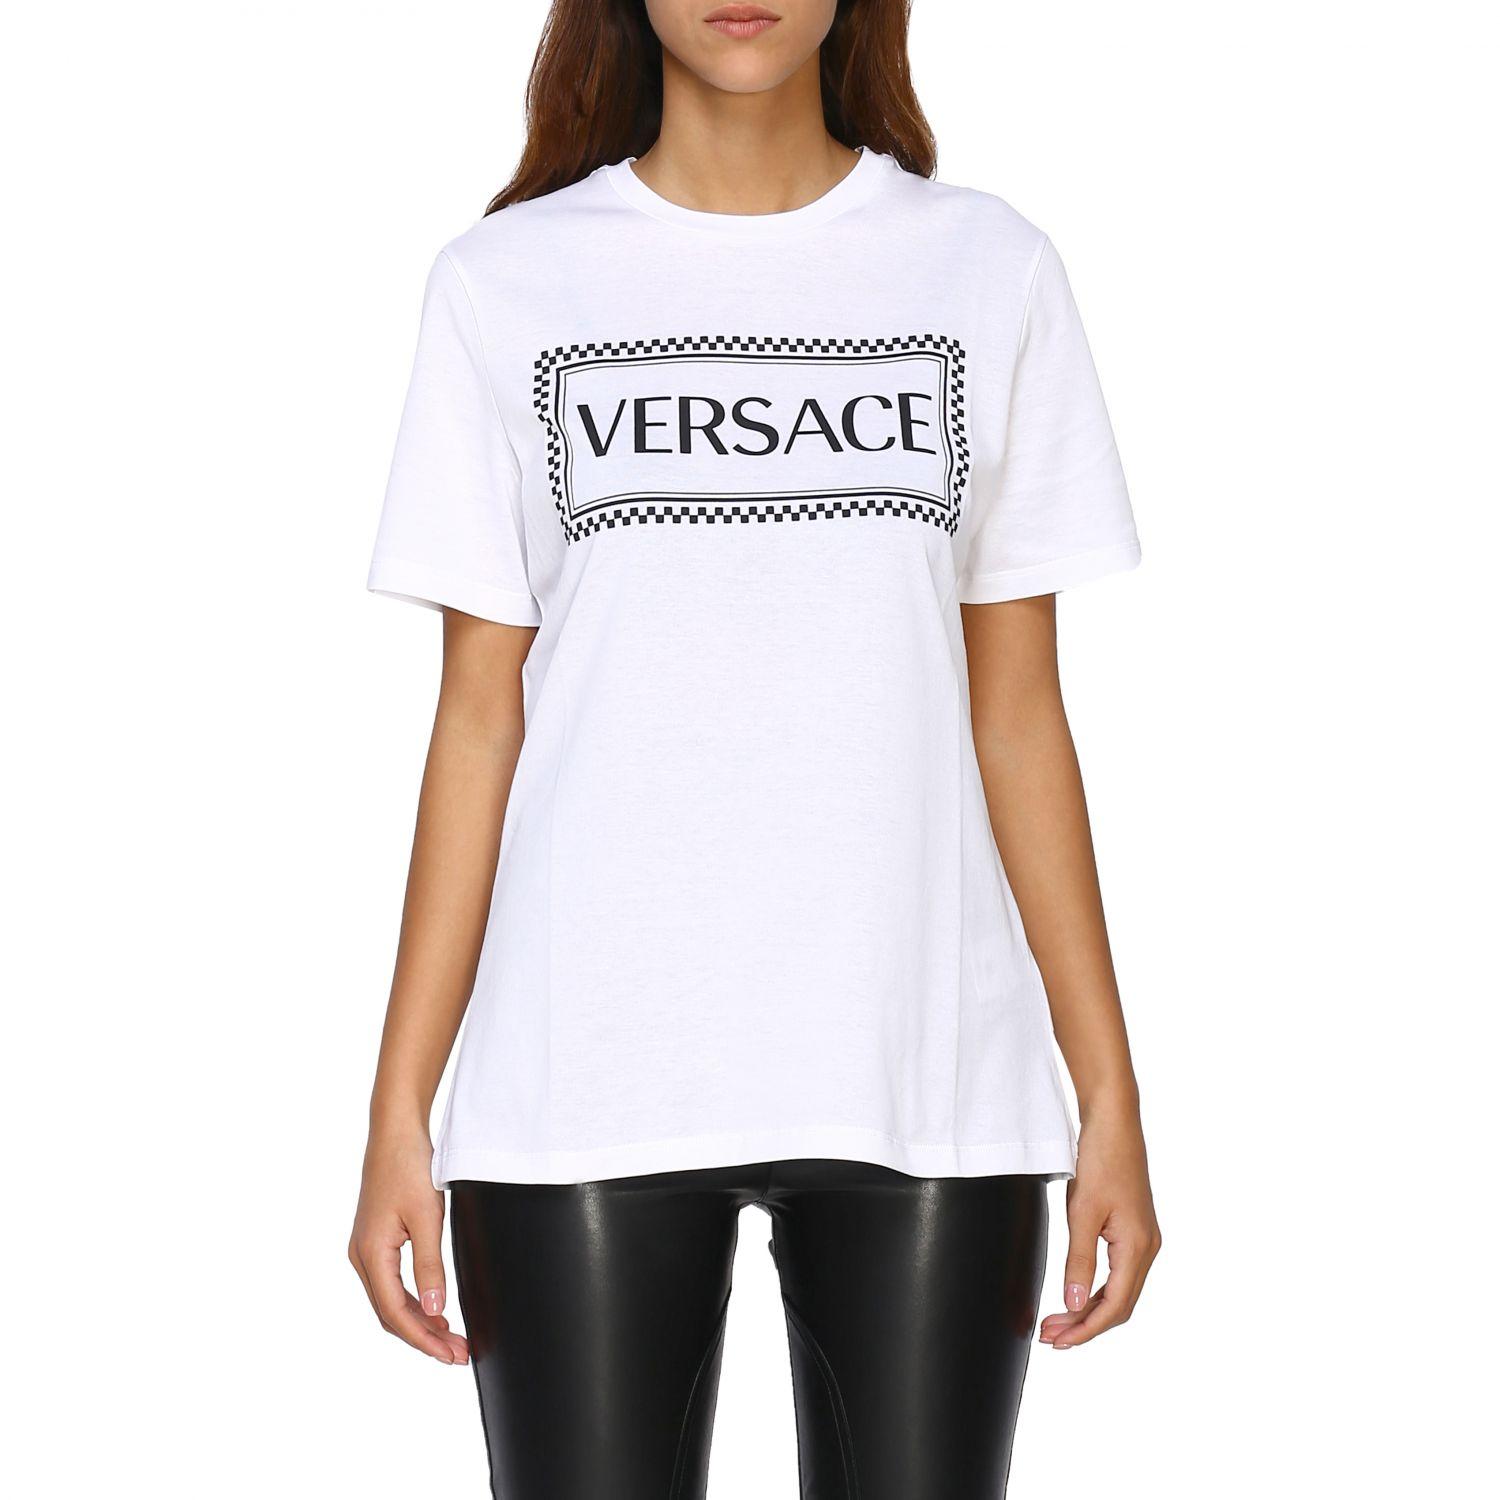 Versace Cotton Women's T-shirt in White - Lyst